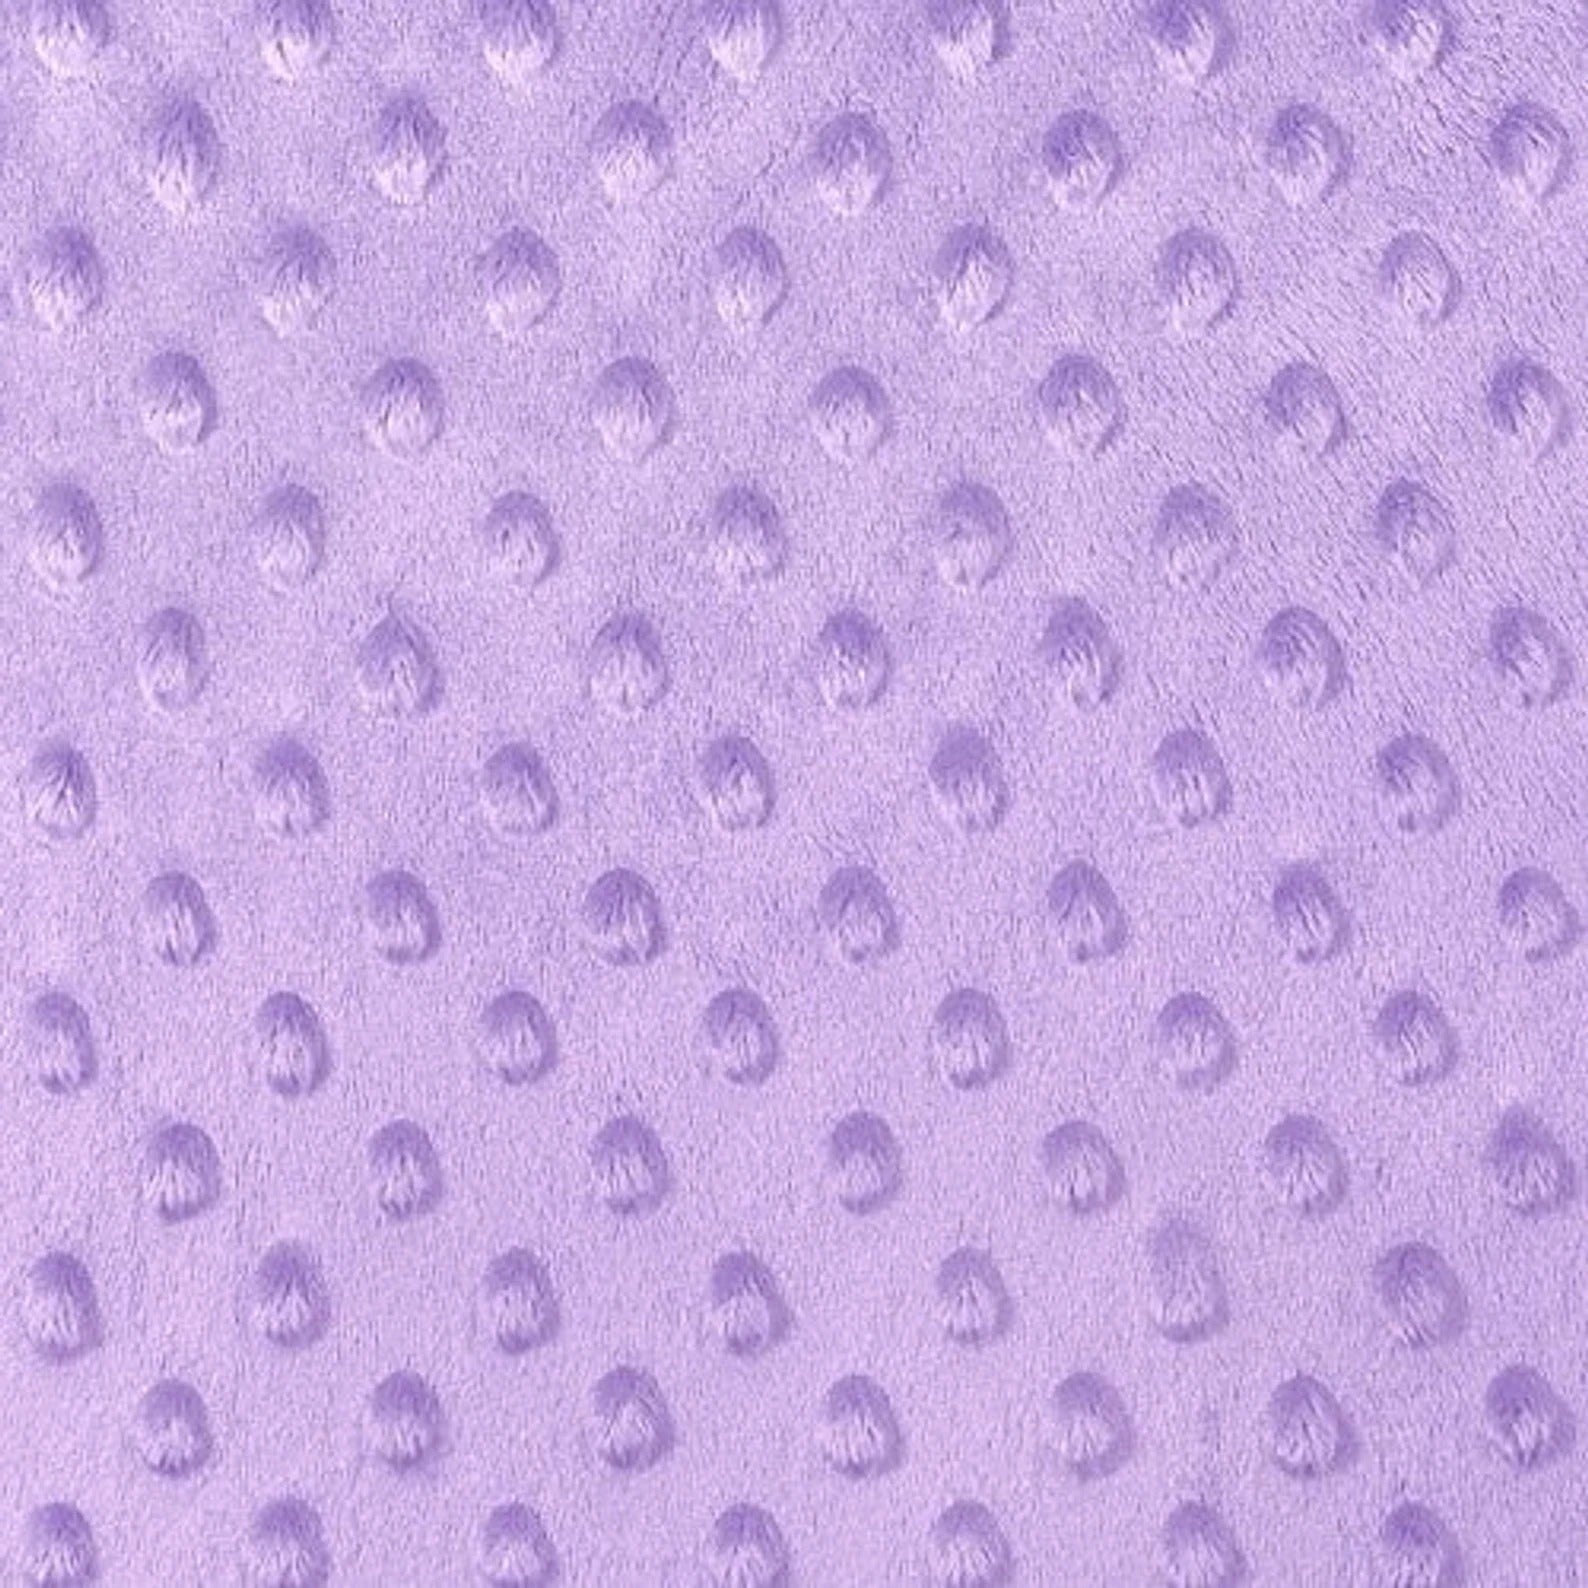 Bubble Polka Dot Minky Fabric By The Roll (20 Yards) Wholesale FabricMinkyICEFABRICICE FABRICSLilacBy The Roll (60" Wide)Bubble Polka Dot Minky Fabric By The Roll (20 Yards) Wholesale Fabric ICEFABRIC Lilac